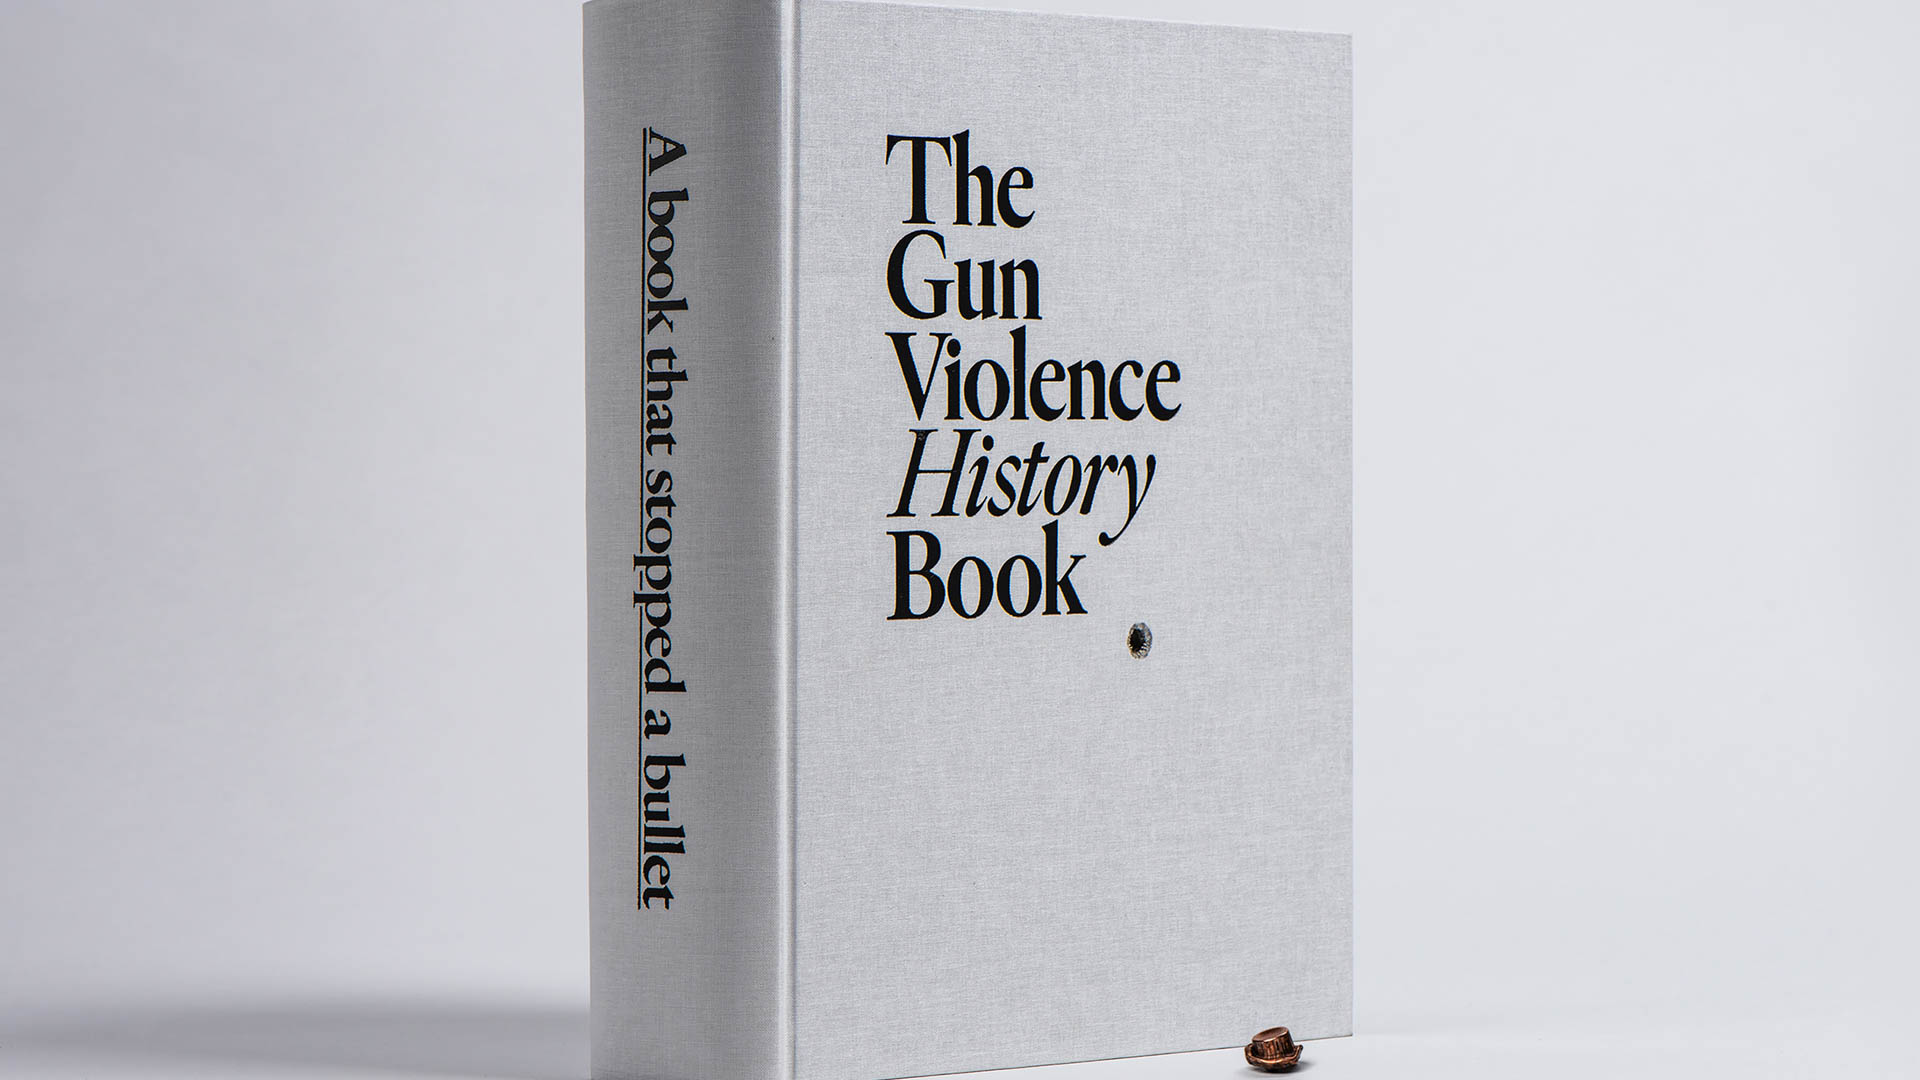 The Gun Violence History Book